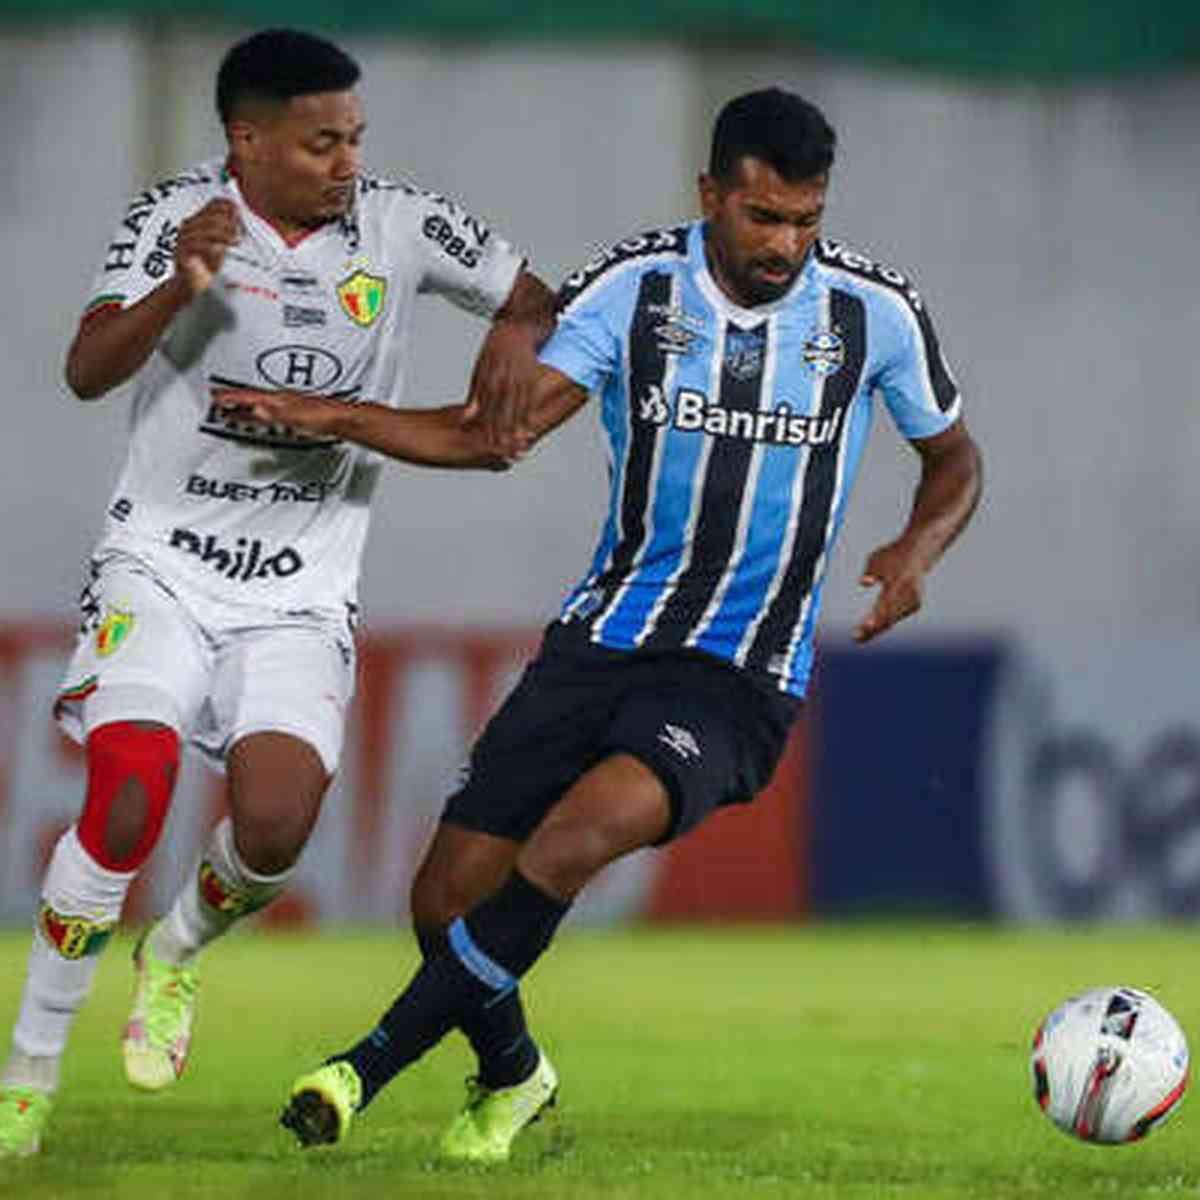 Ceará SC vs Tombense: A Clash of Skills